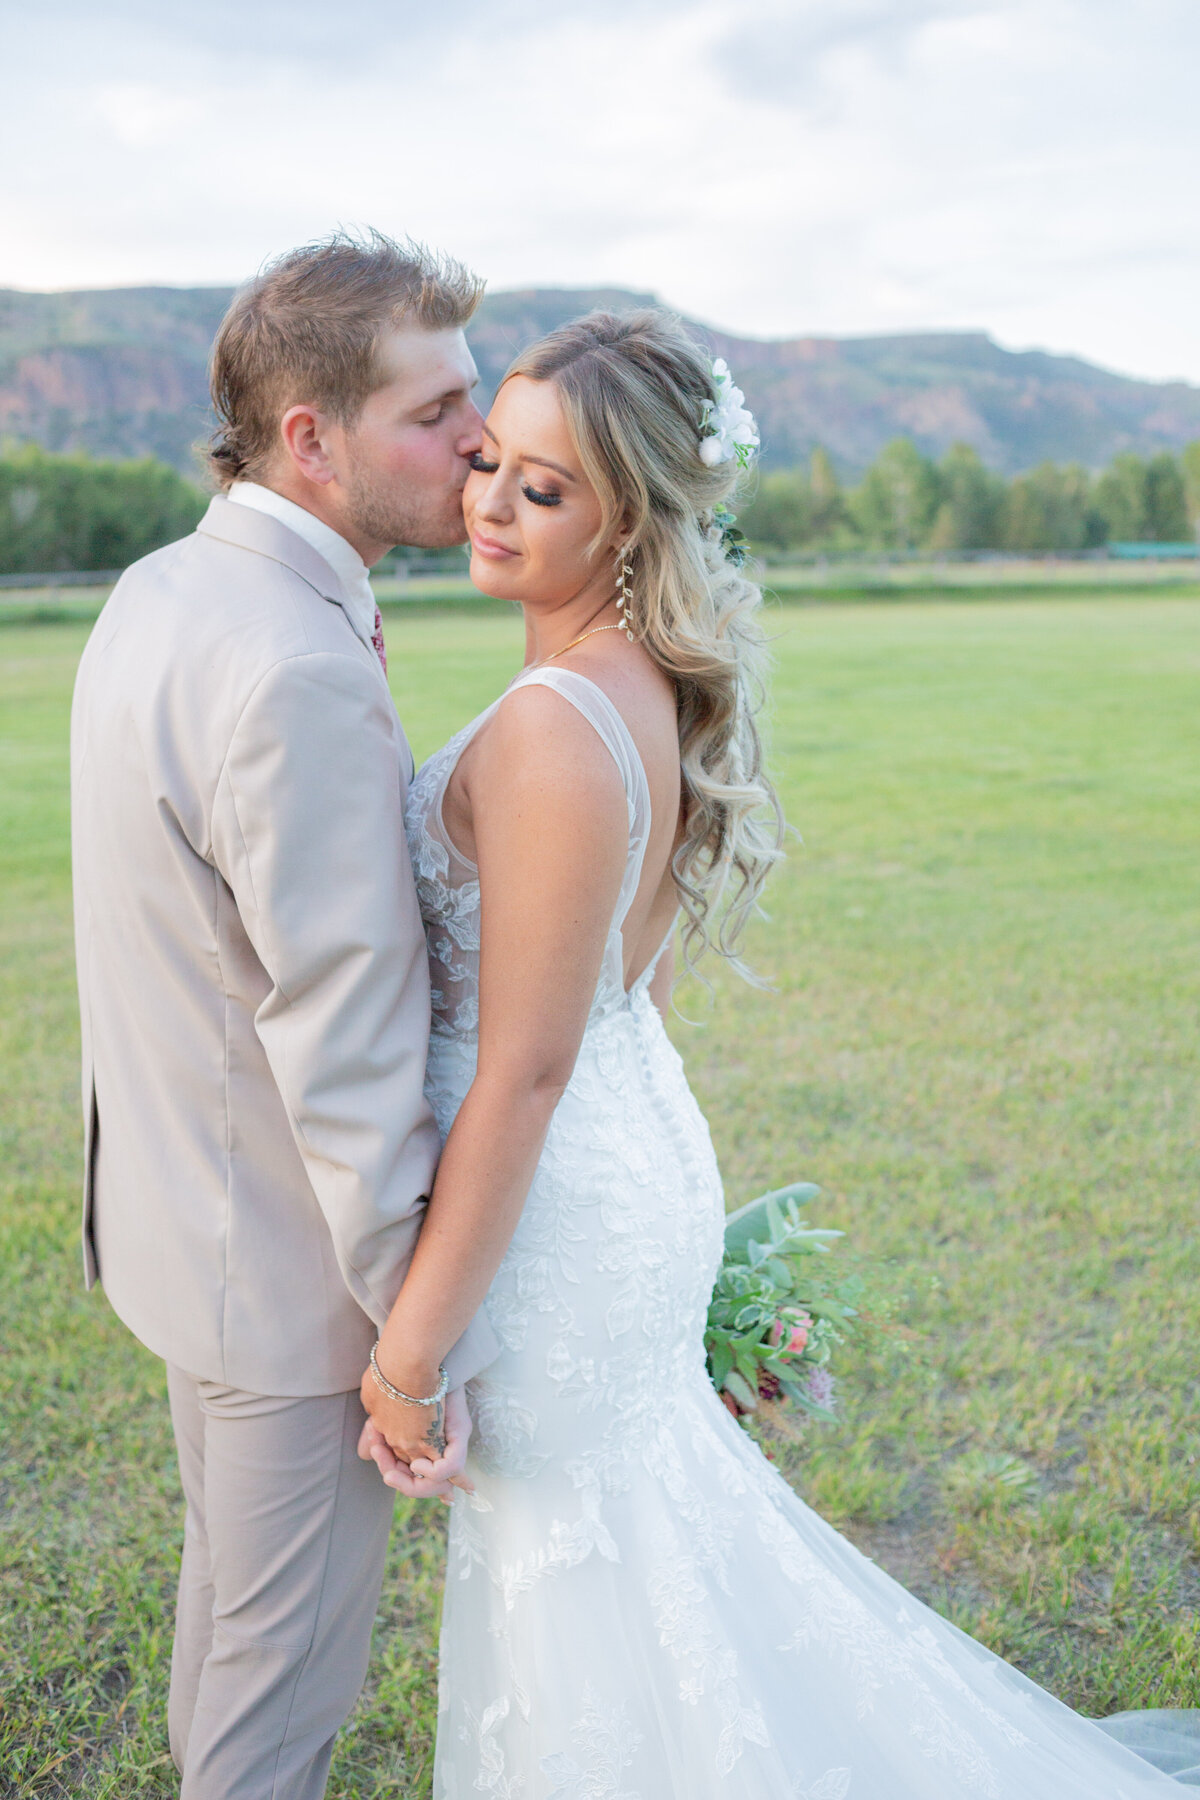 Washington Elopement Photographer captures groom kissing bride's cheek during outdoor bridal portraits after mountain elopement